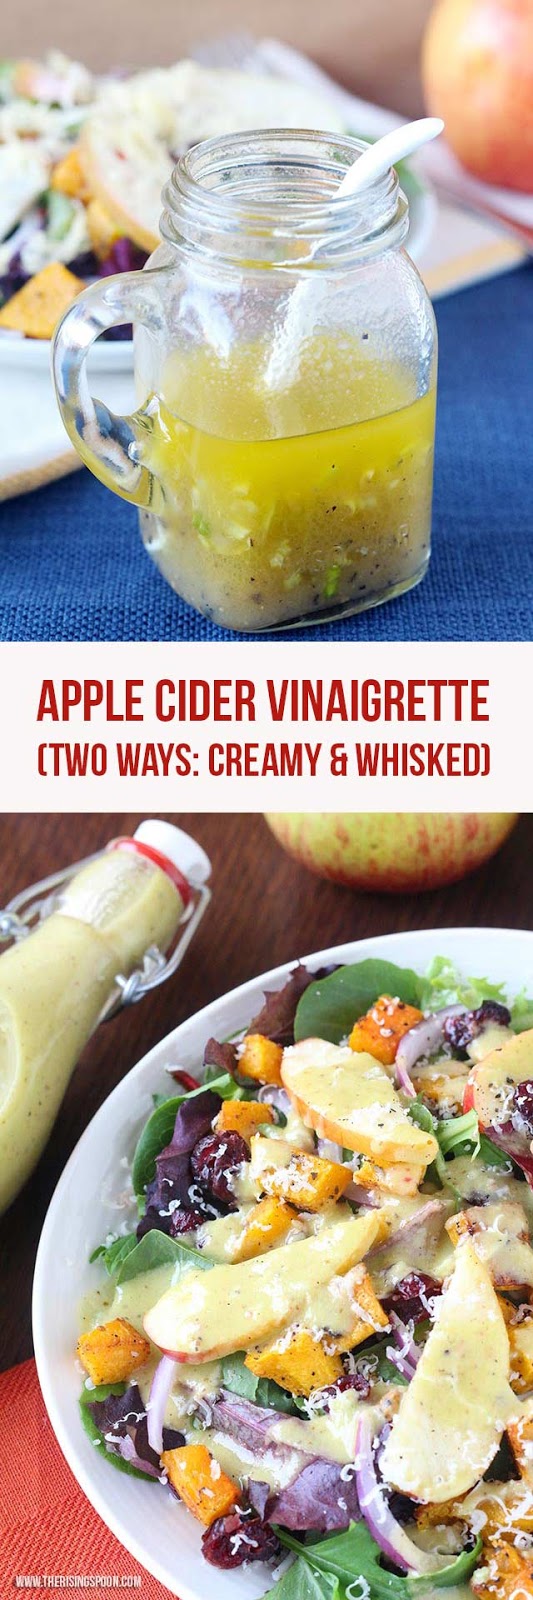 Apple Cider Vinaigrette Two Ways: Creamy & Whisked (Paleo & Vegan)